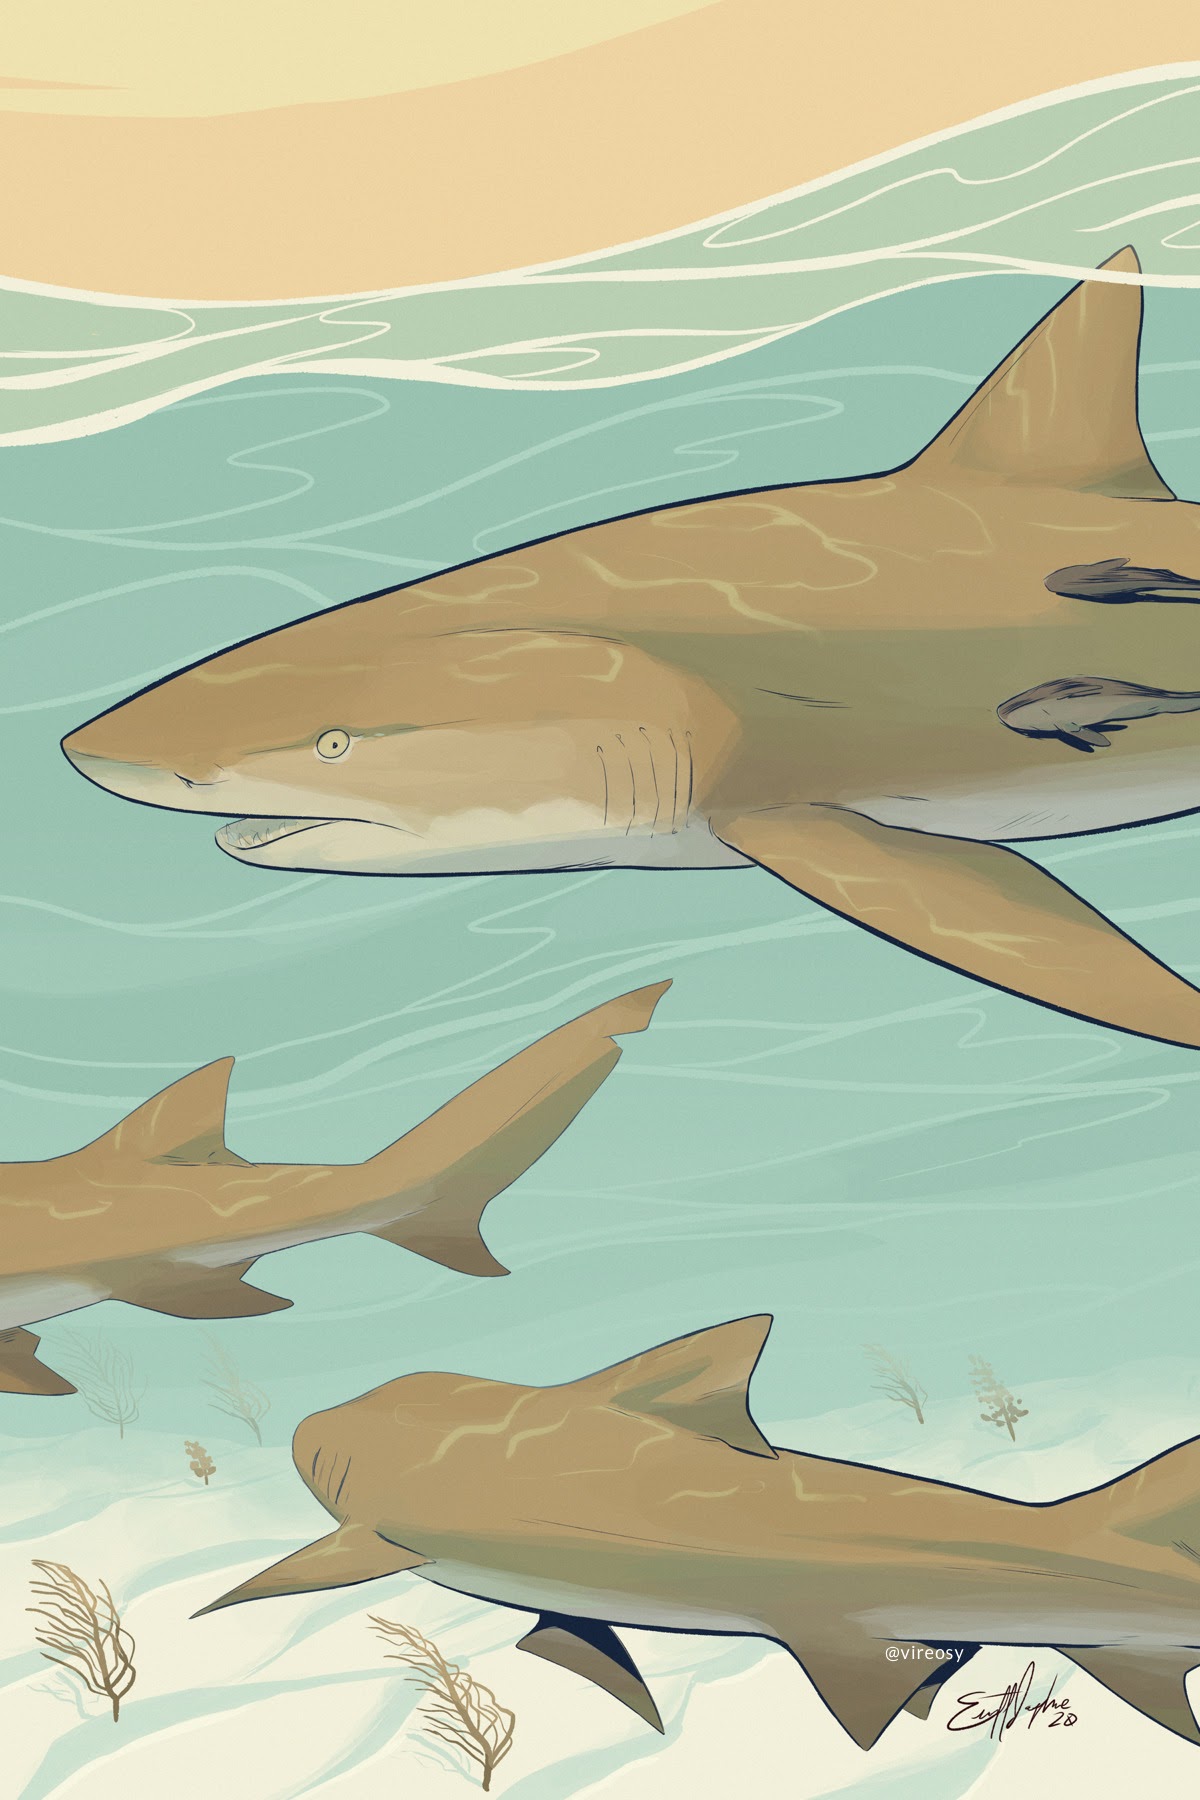 Illustration of a trio of lemon sharks.